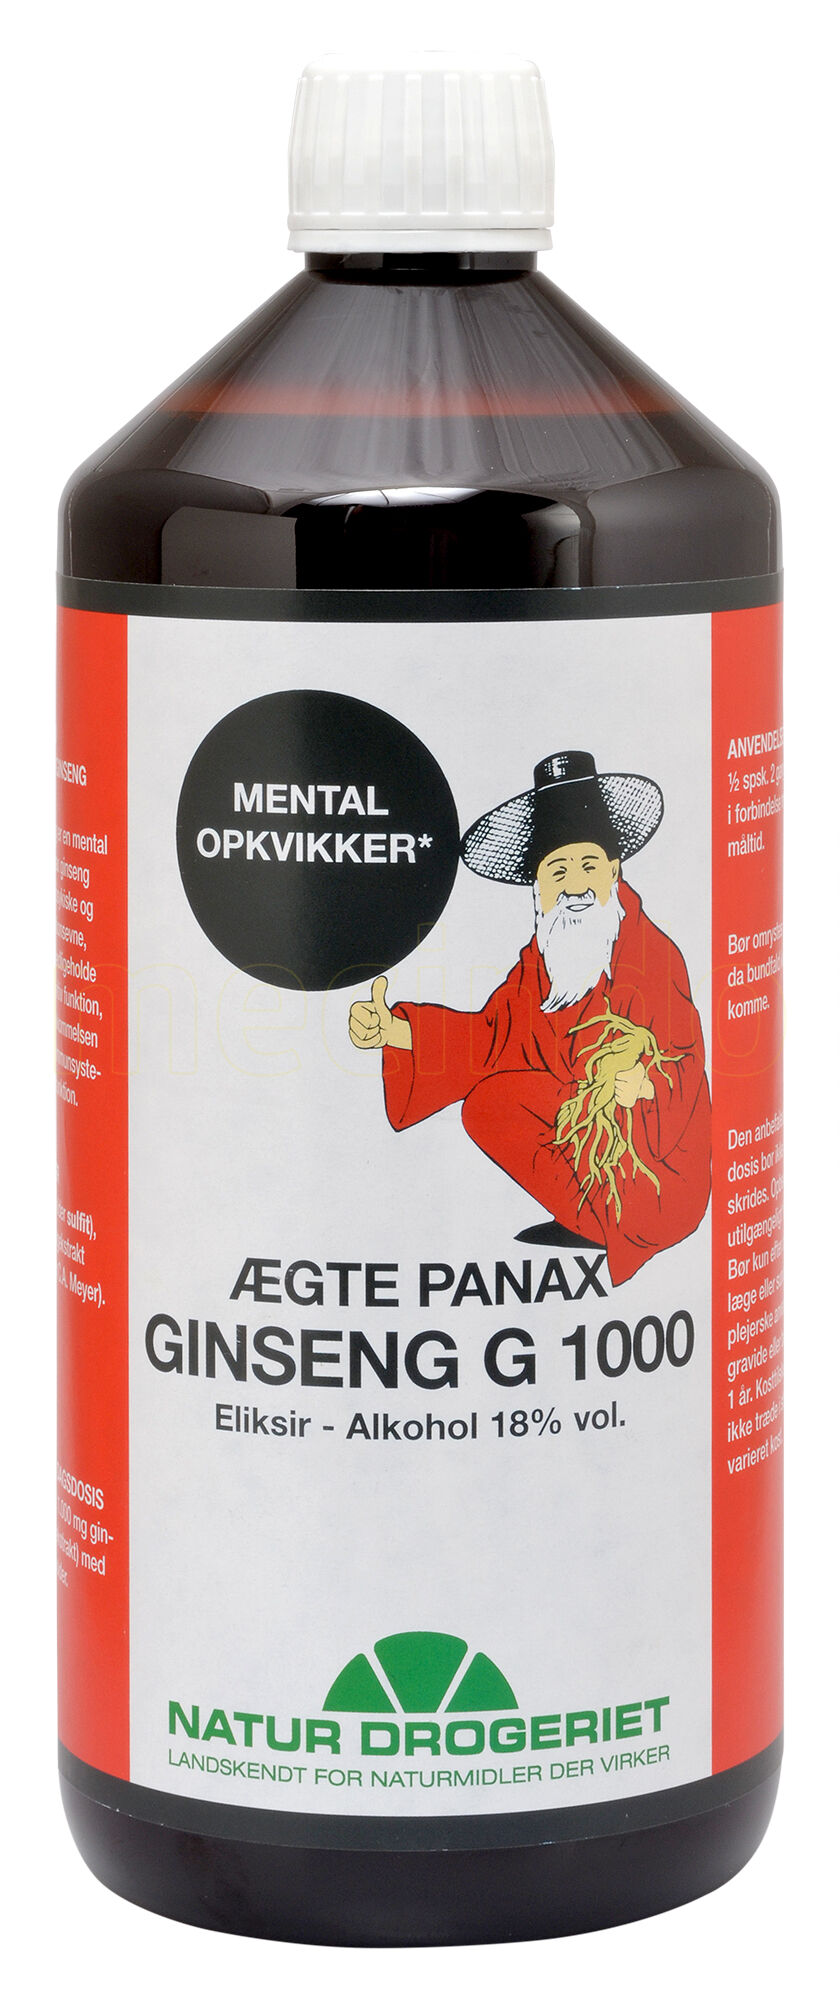 Natur Drogeriet Natur-Drogeriet Ginseng G1000 Eliksir Demofl. Panax - 1 Liter